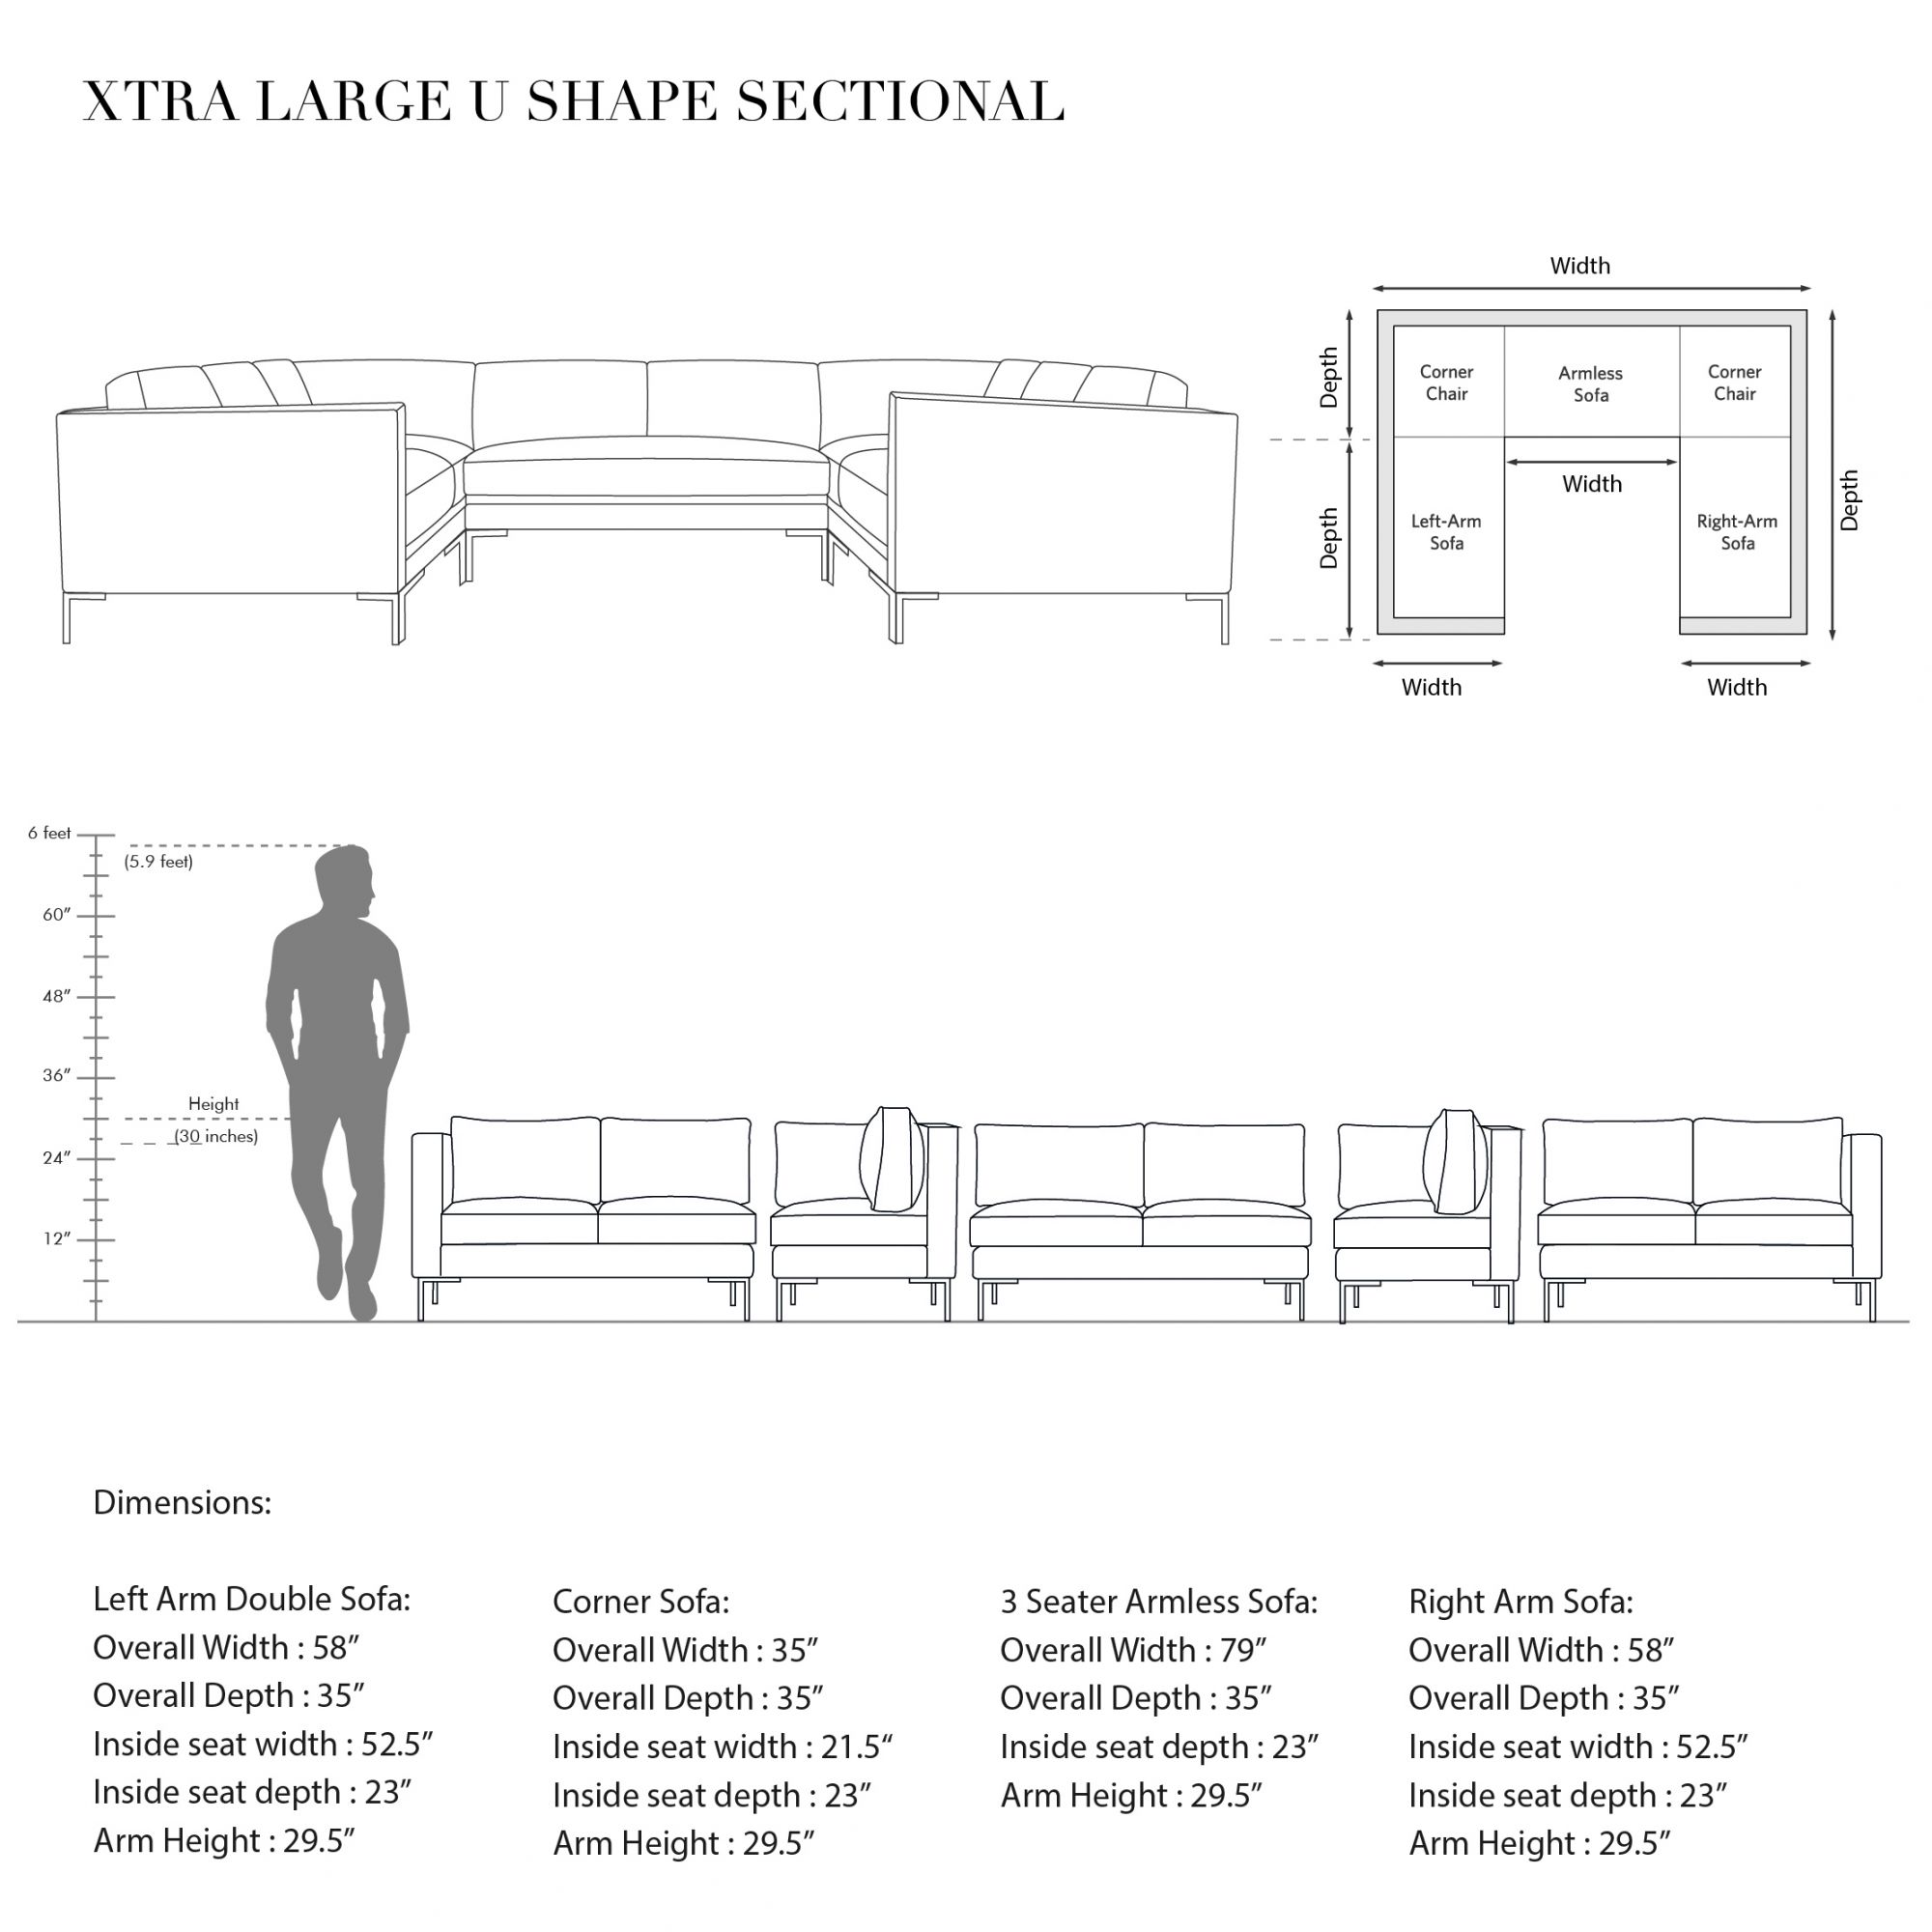 L.A U-shaped Xtra Large sectional